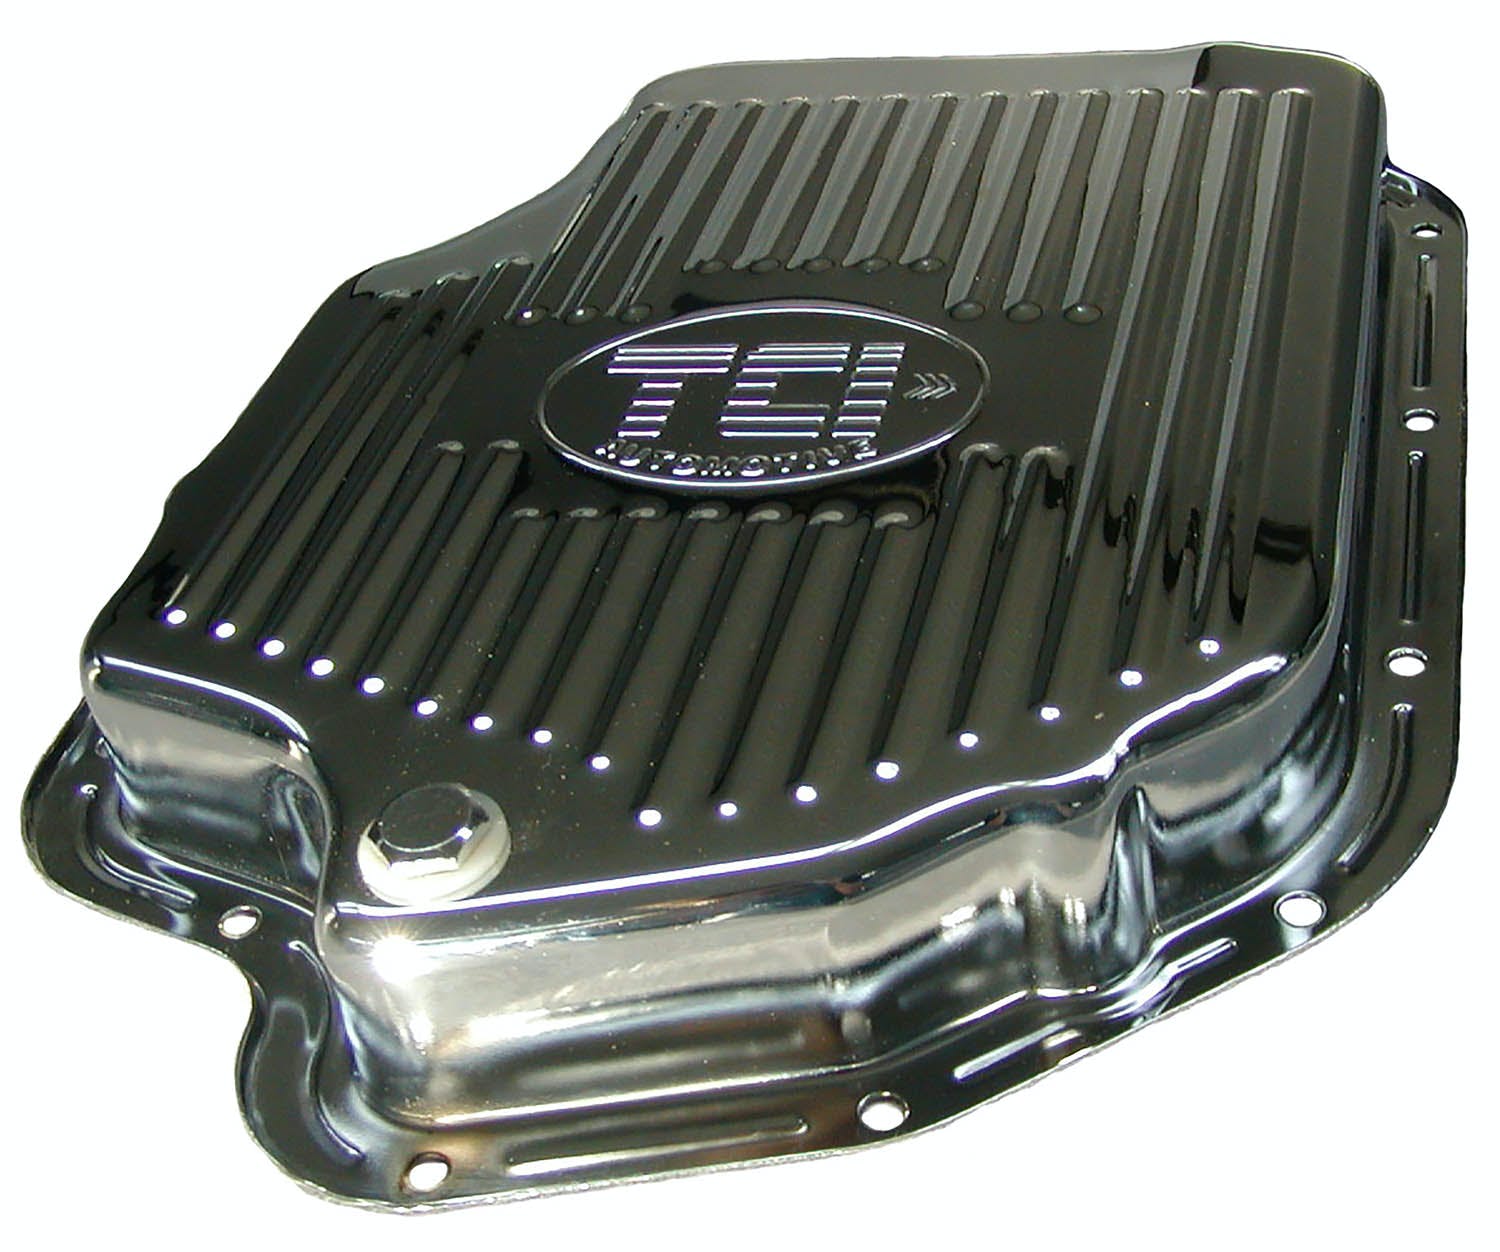 TCI Automotive 228011 GM TH400 Chrome-Plated Pan (Stock Depth)